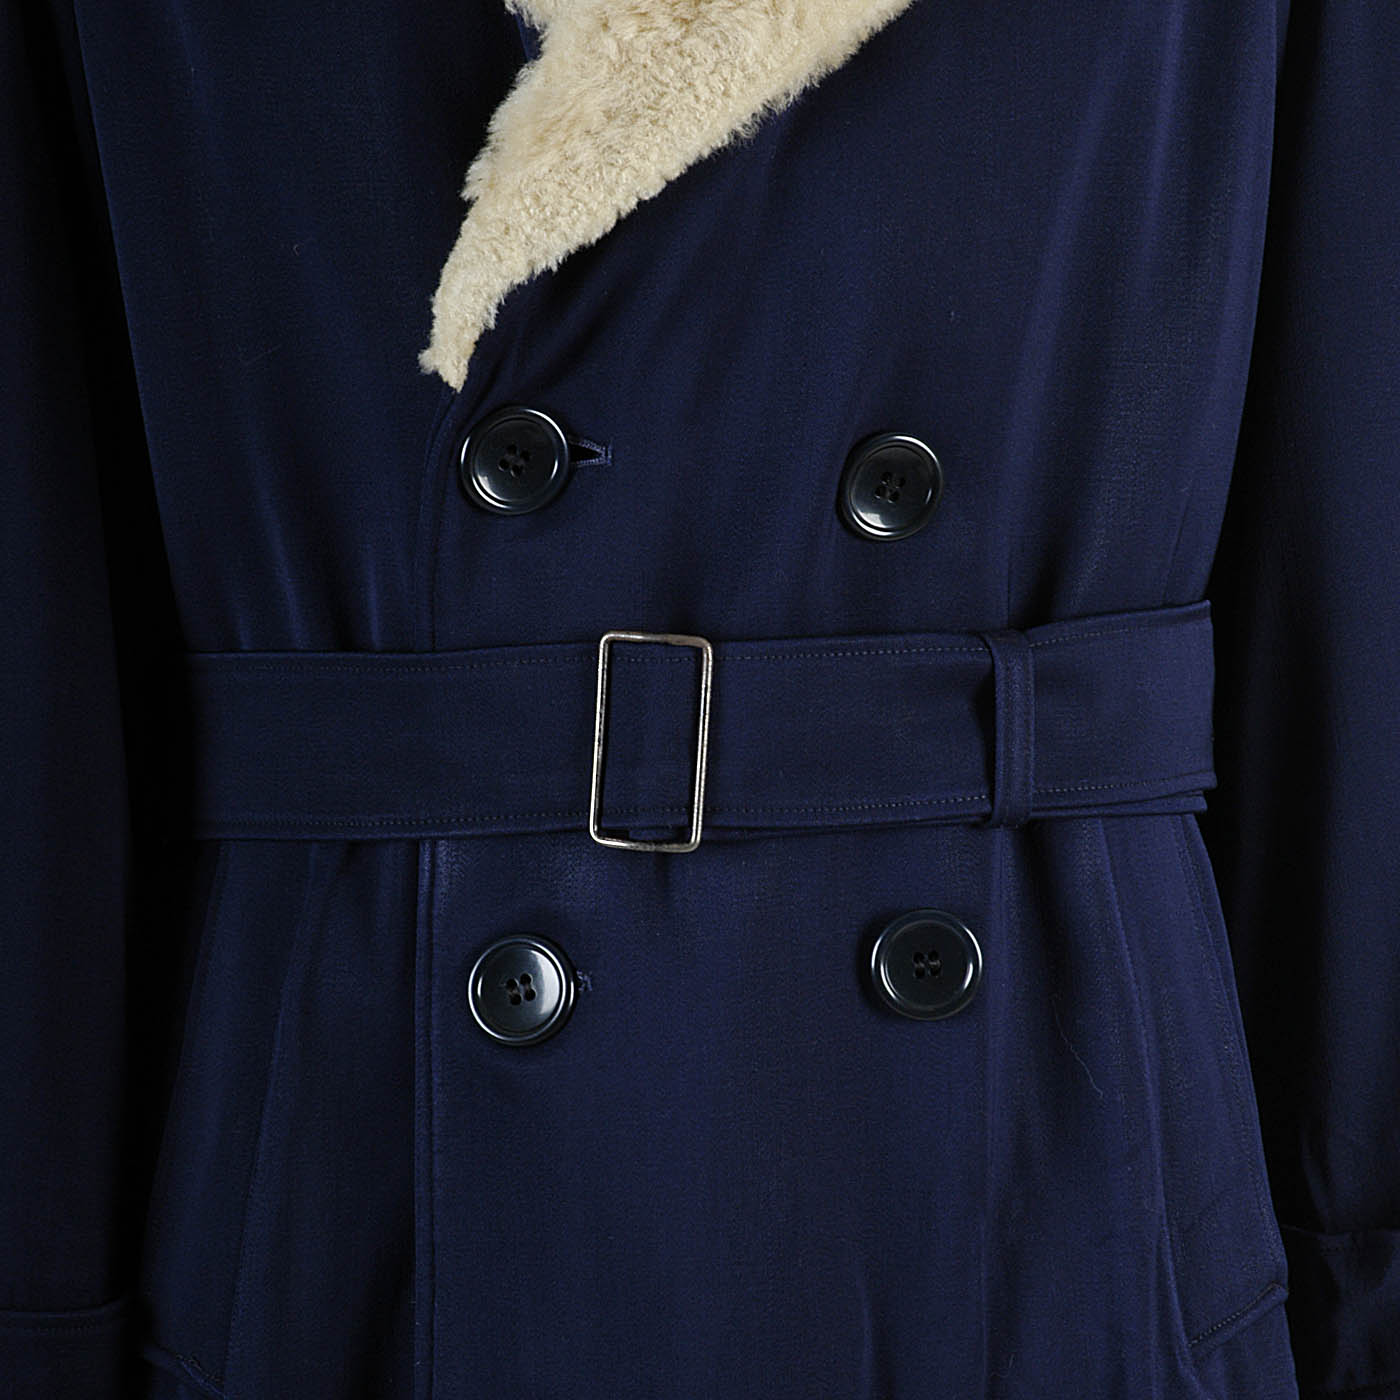 1950s Men's Heavy Duty Navy Blue Gabardine Winter Coat with Mouton Fur Collar